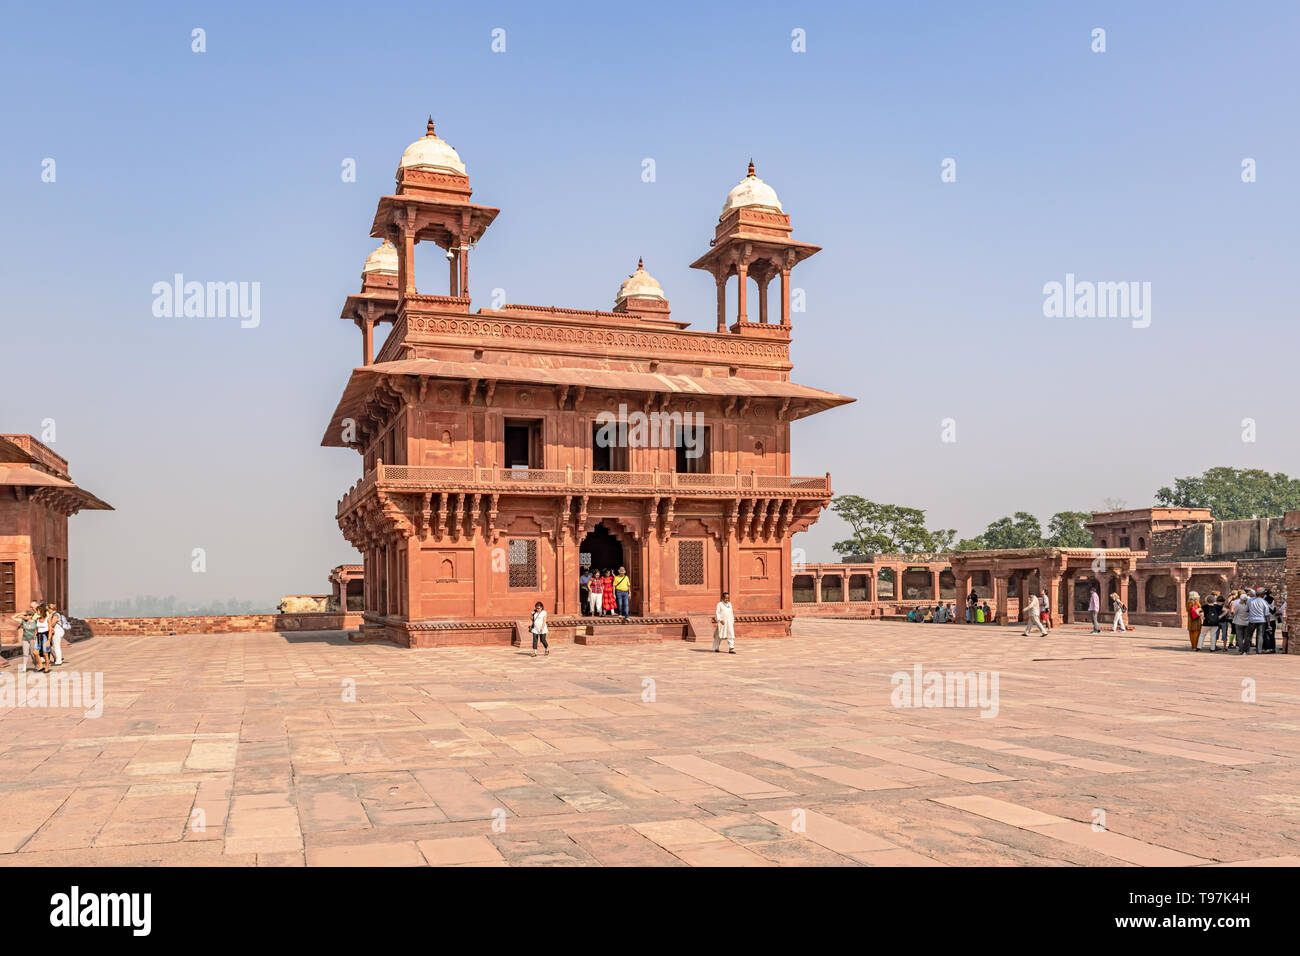 Agra, India - 20 Nov 2018: i turisti in visita a sala di udienza privata, abbandonati Mogul città costruita dal grande imperatore Mughal Akbar al fine XVI sec. Foto Stock